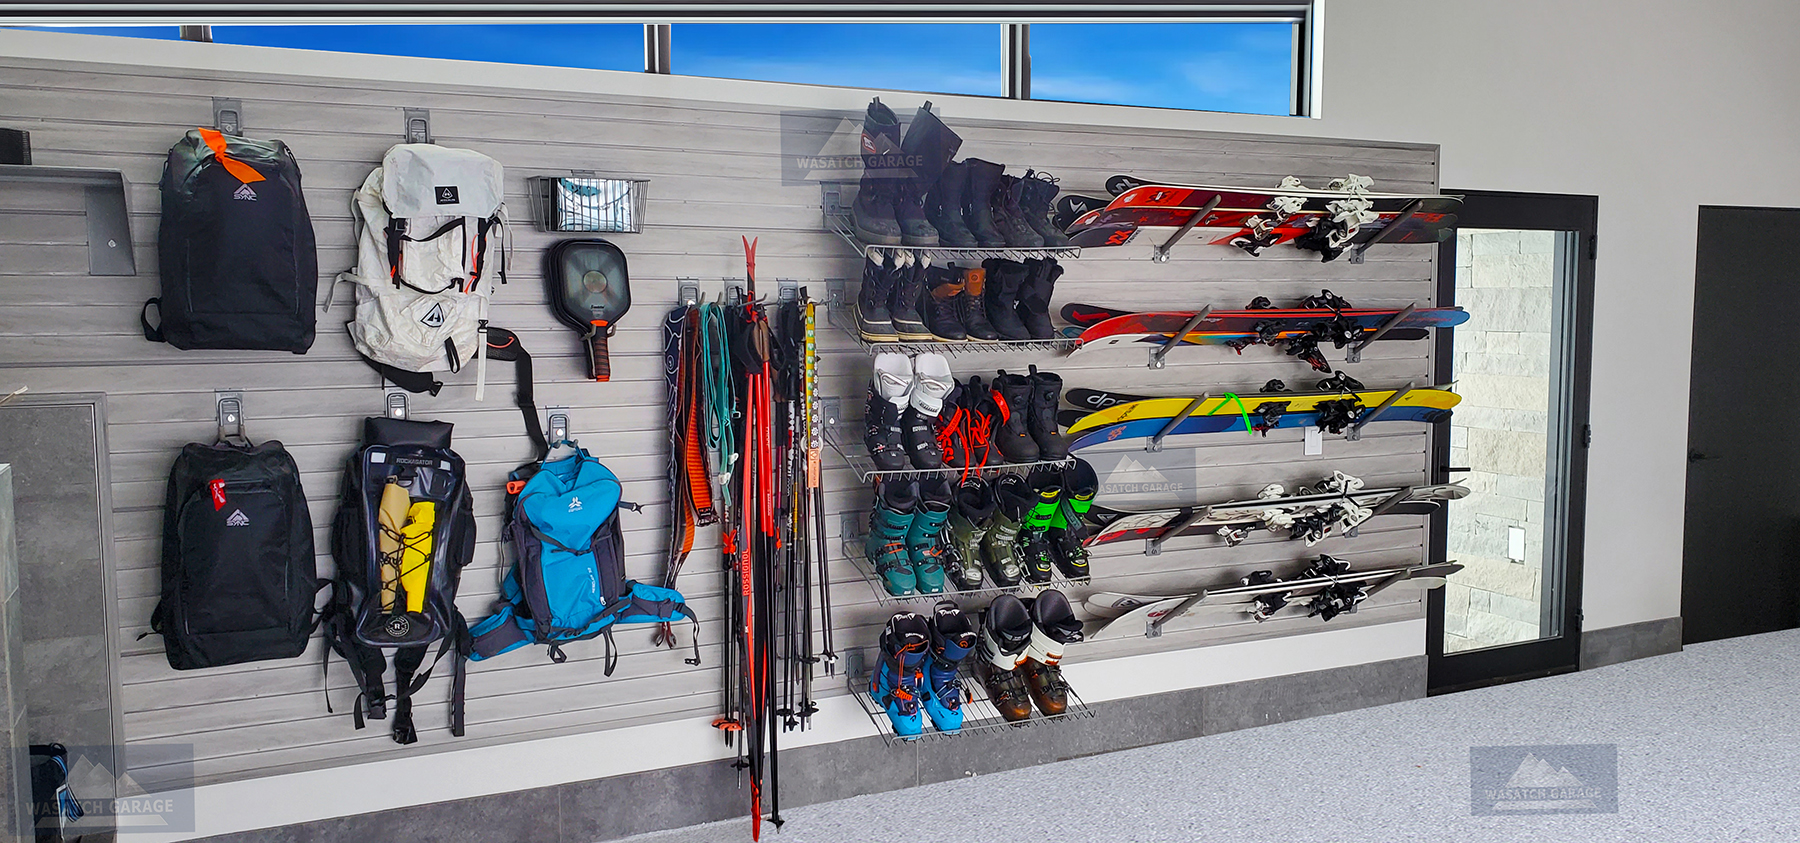 Wasatch-Garage-Utah-Garage-snowboards-new-ski-storewall-shoop-sales